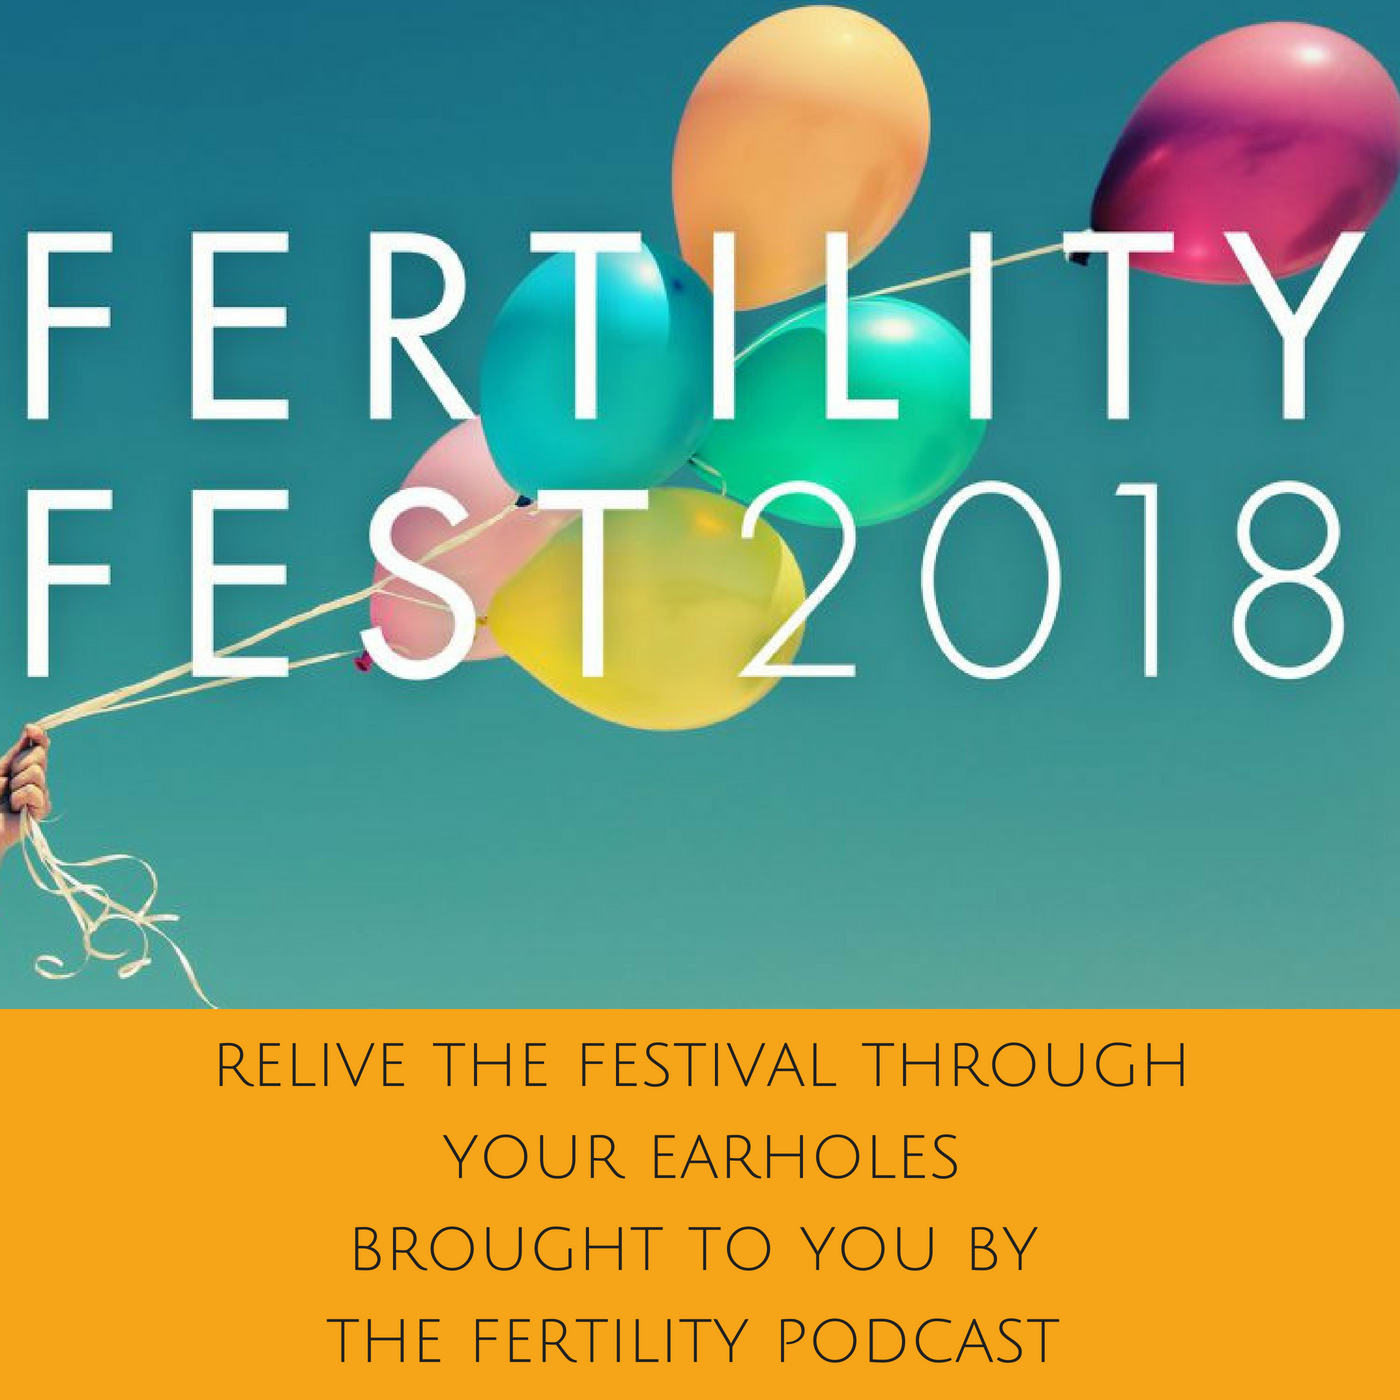 BONUS EPISODE FERTILITY FEST 2018: 40 Years of IVF